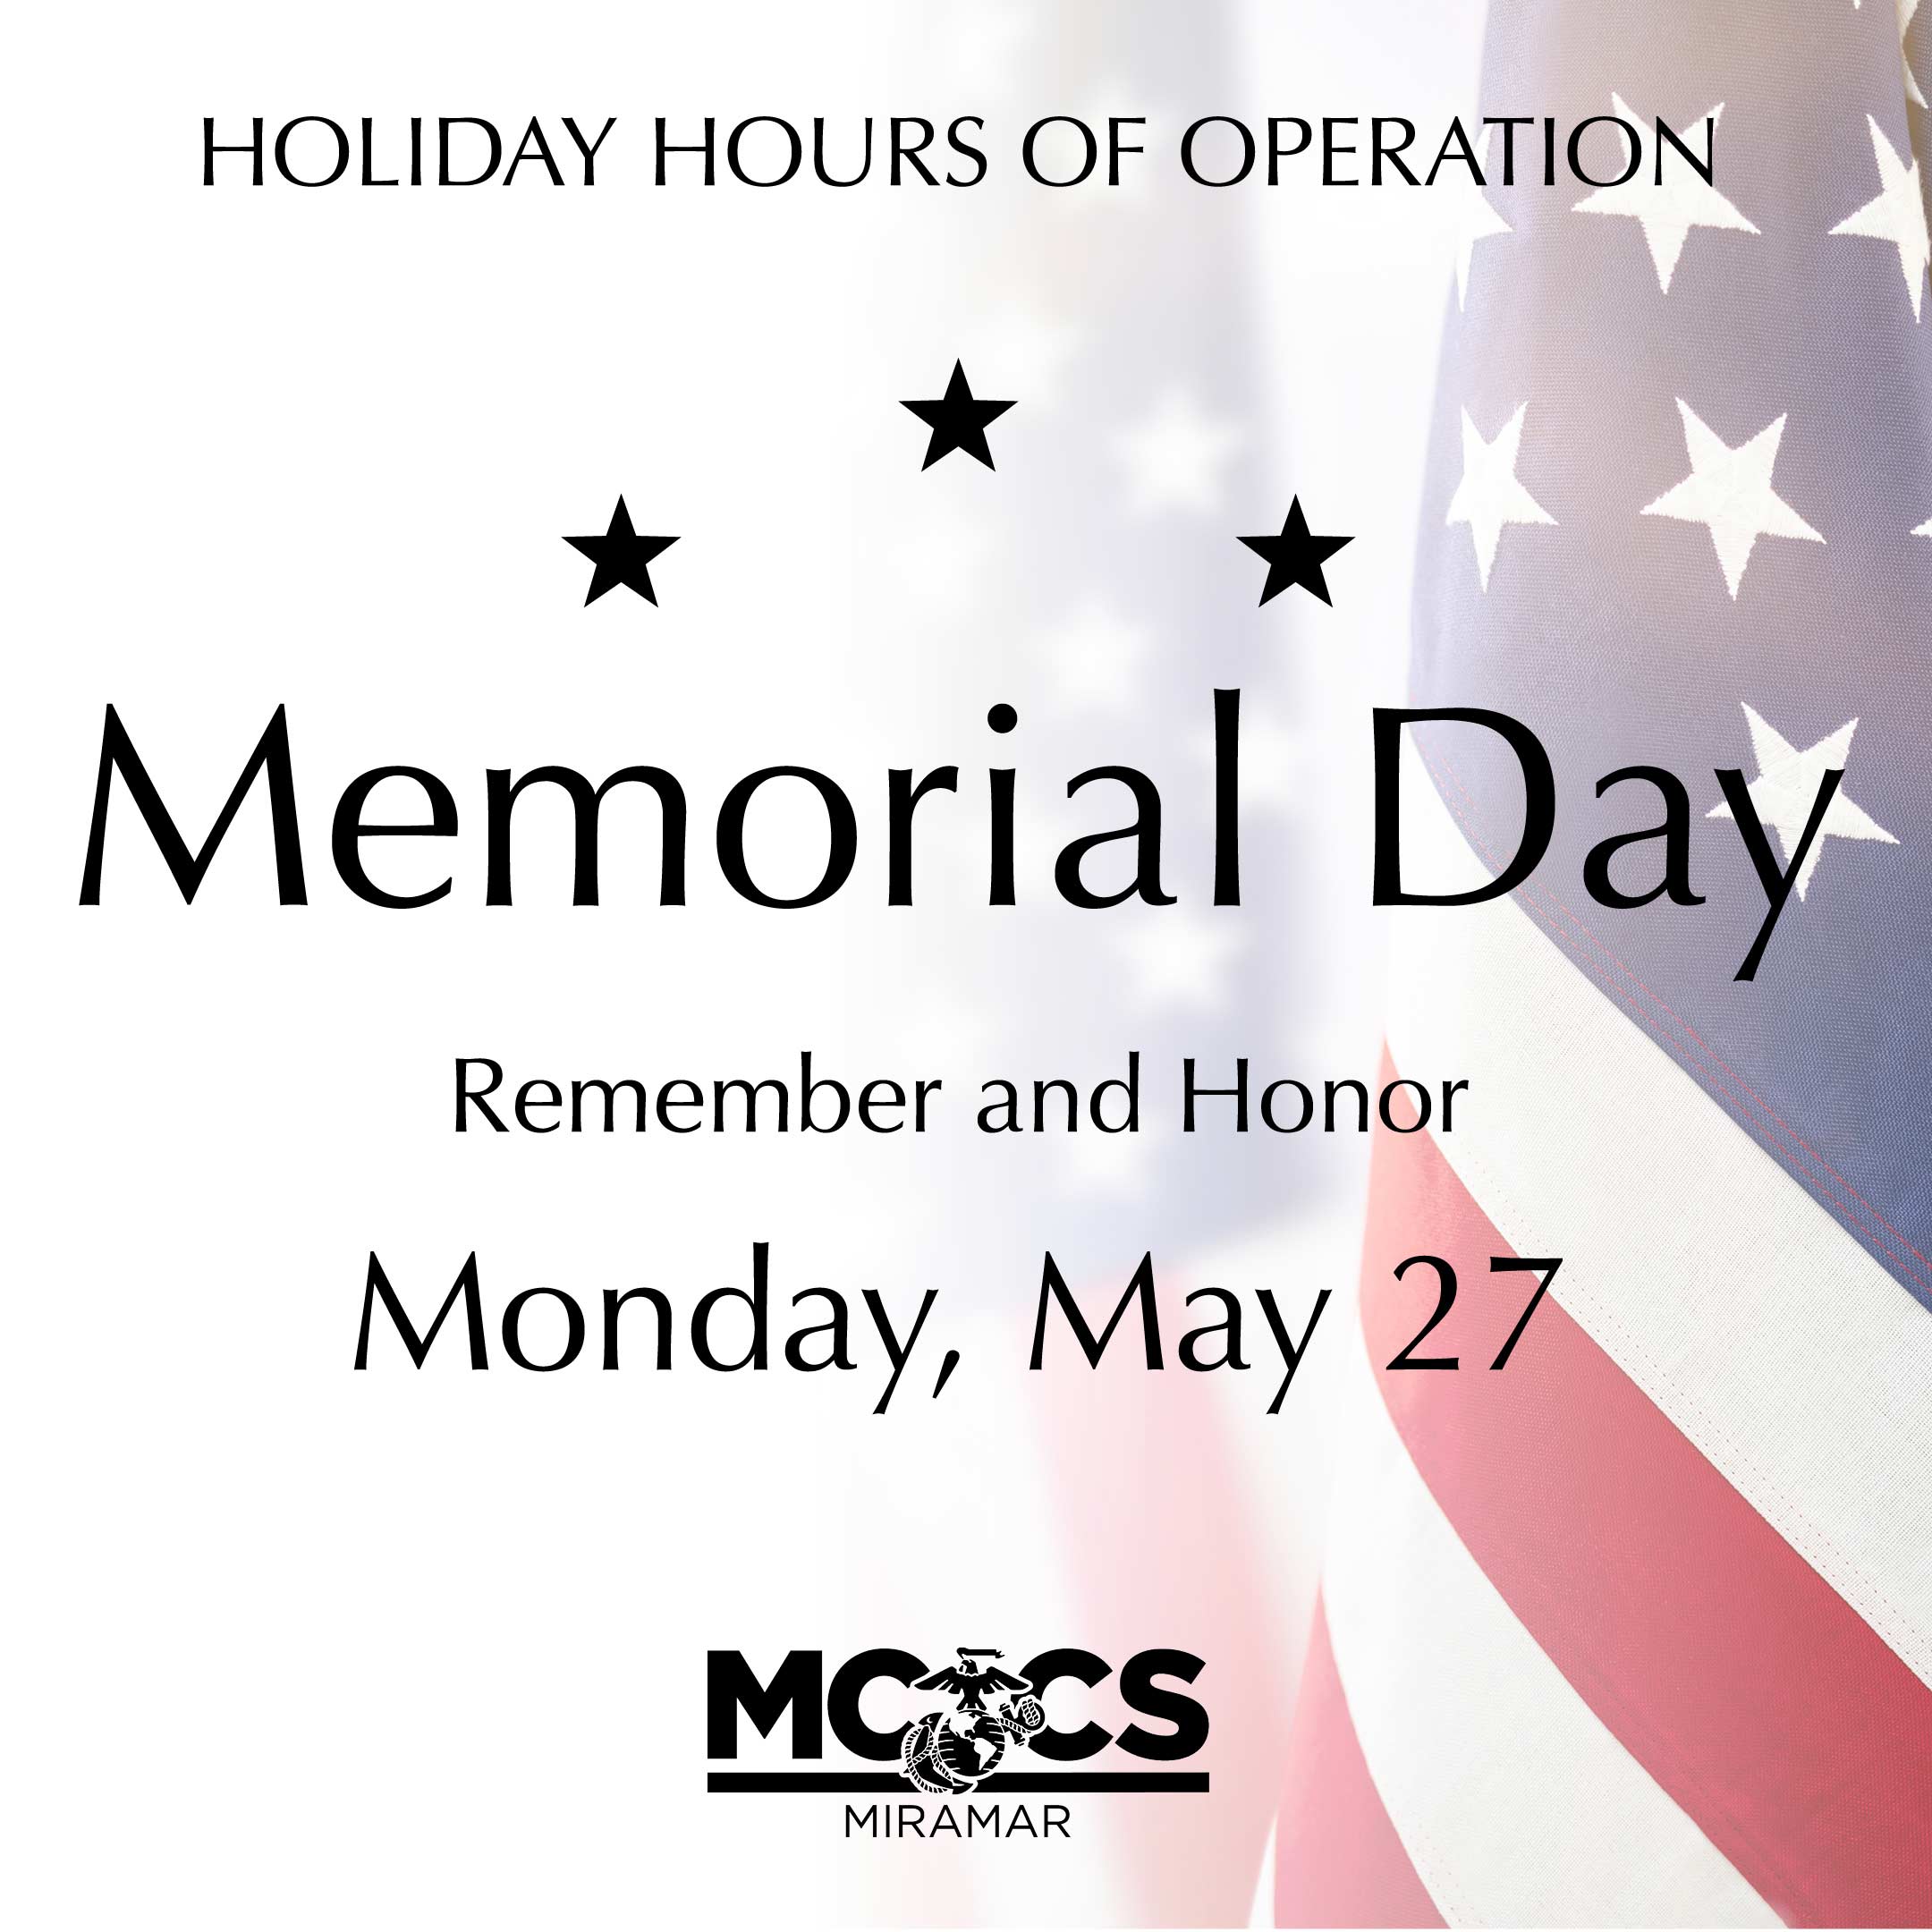 2024-MCCS-Miramar-Memorial-Day-Holiday-Hours-of-Operation-social-media.jpg